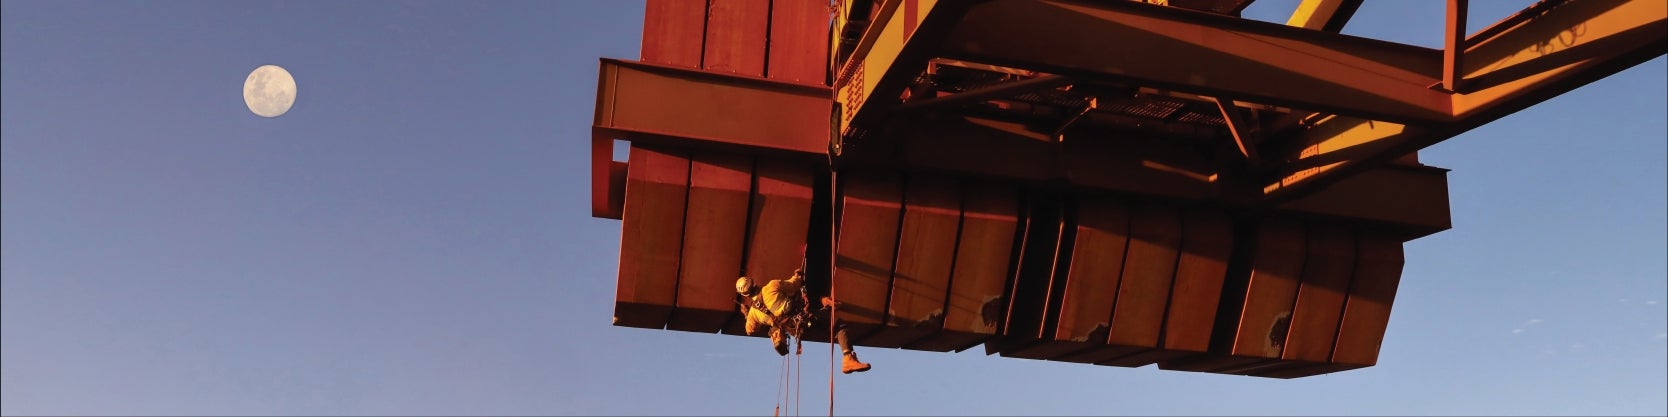 Texcan  -亚博电竞官网网址 行业（查看全部）横幅图片：人类攀登攀岩大型起重机的人在工业环境中